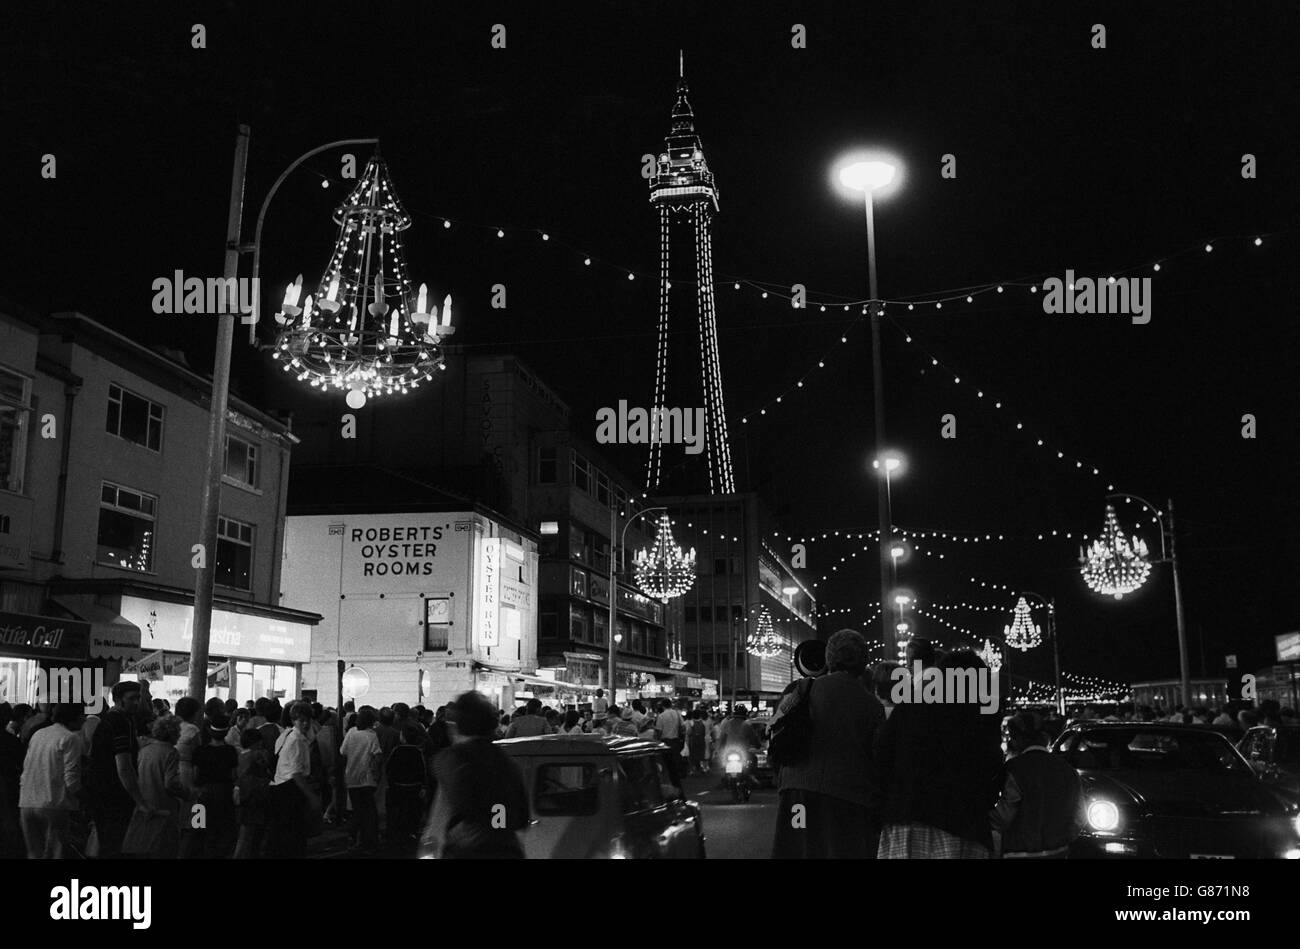 Customs and Traditions - Blackpool Illuminations Stock Photo